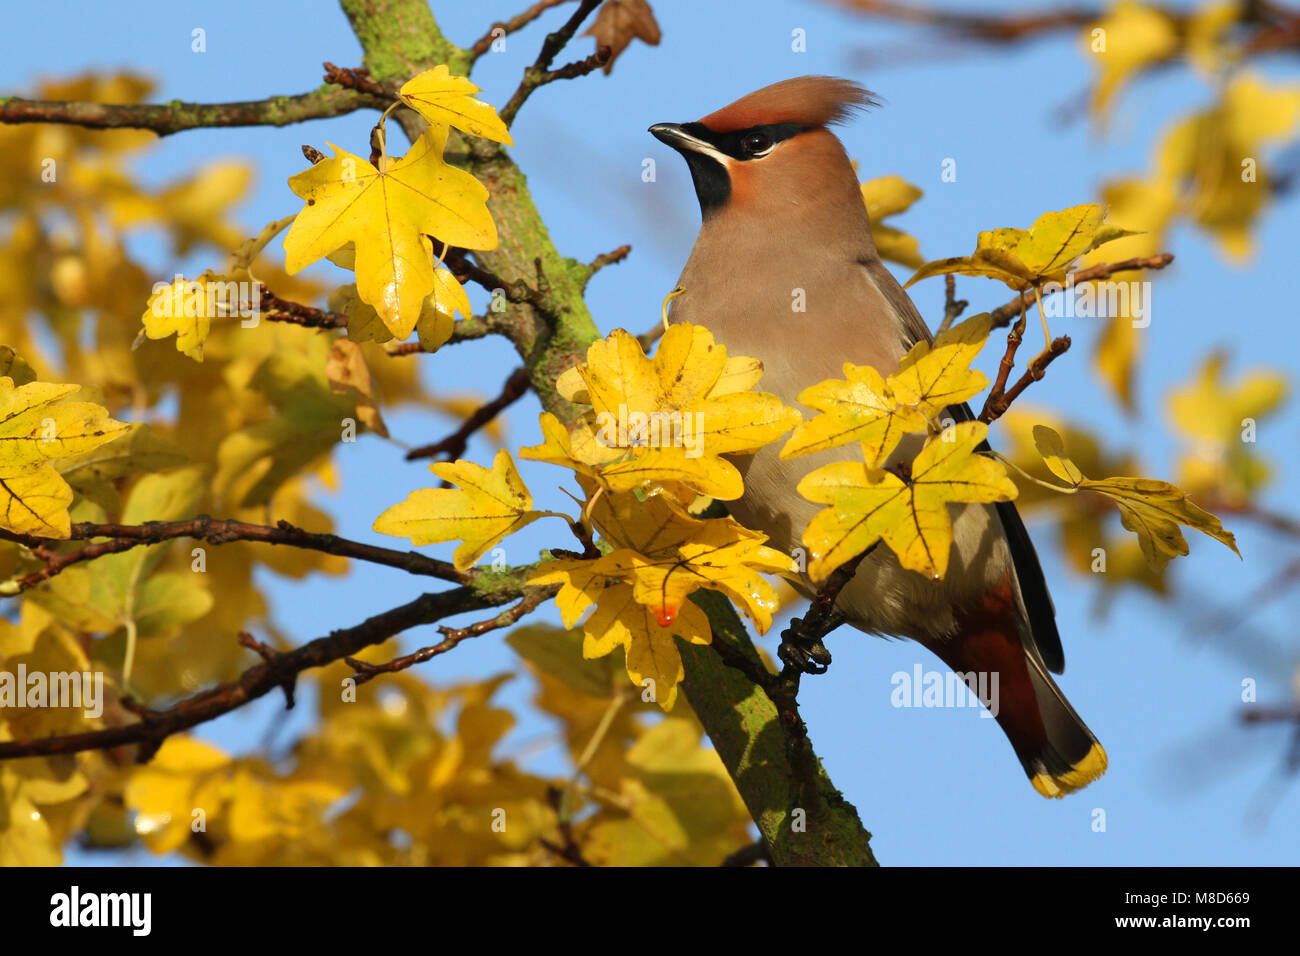 Pestvogel zittend in boom tijdens herfst; Bohemian Waxwing perched in tree during autumn Stock Photo